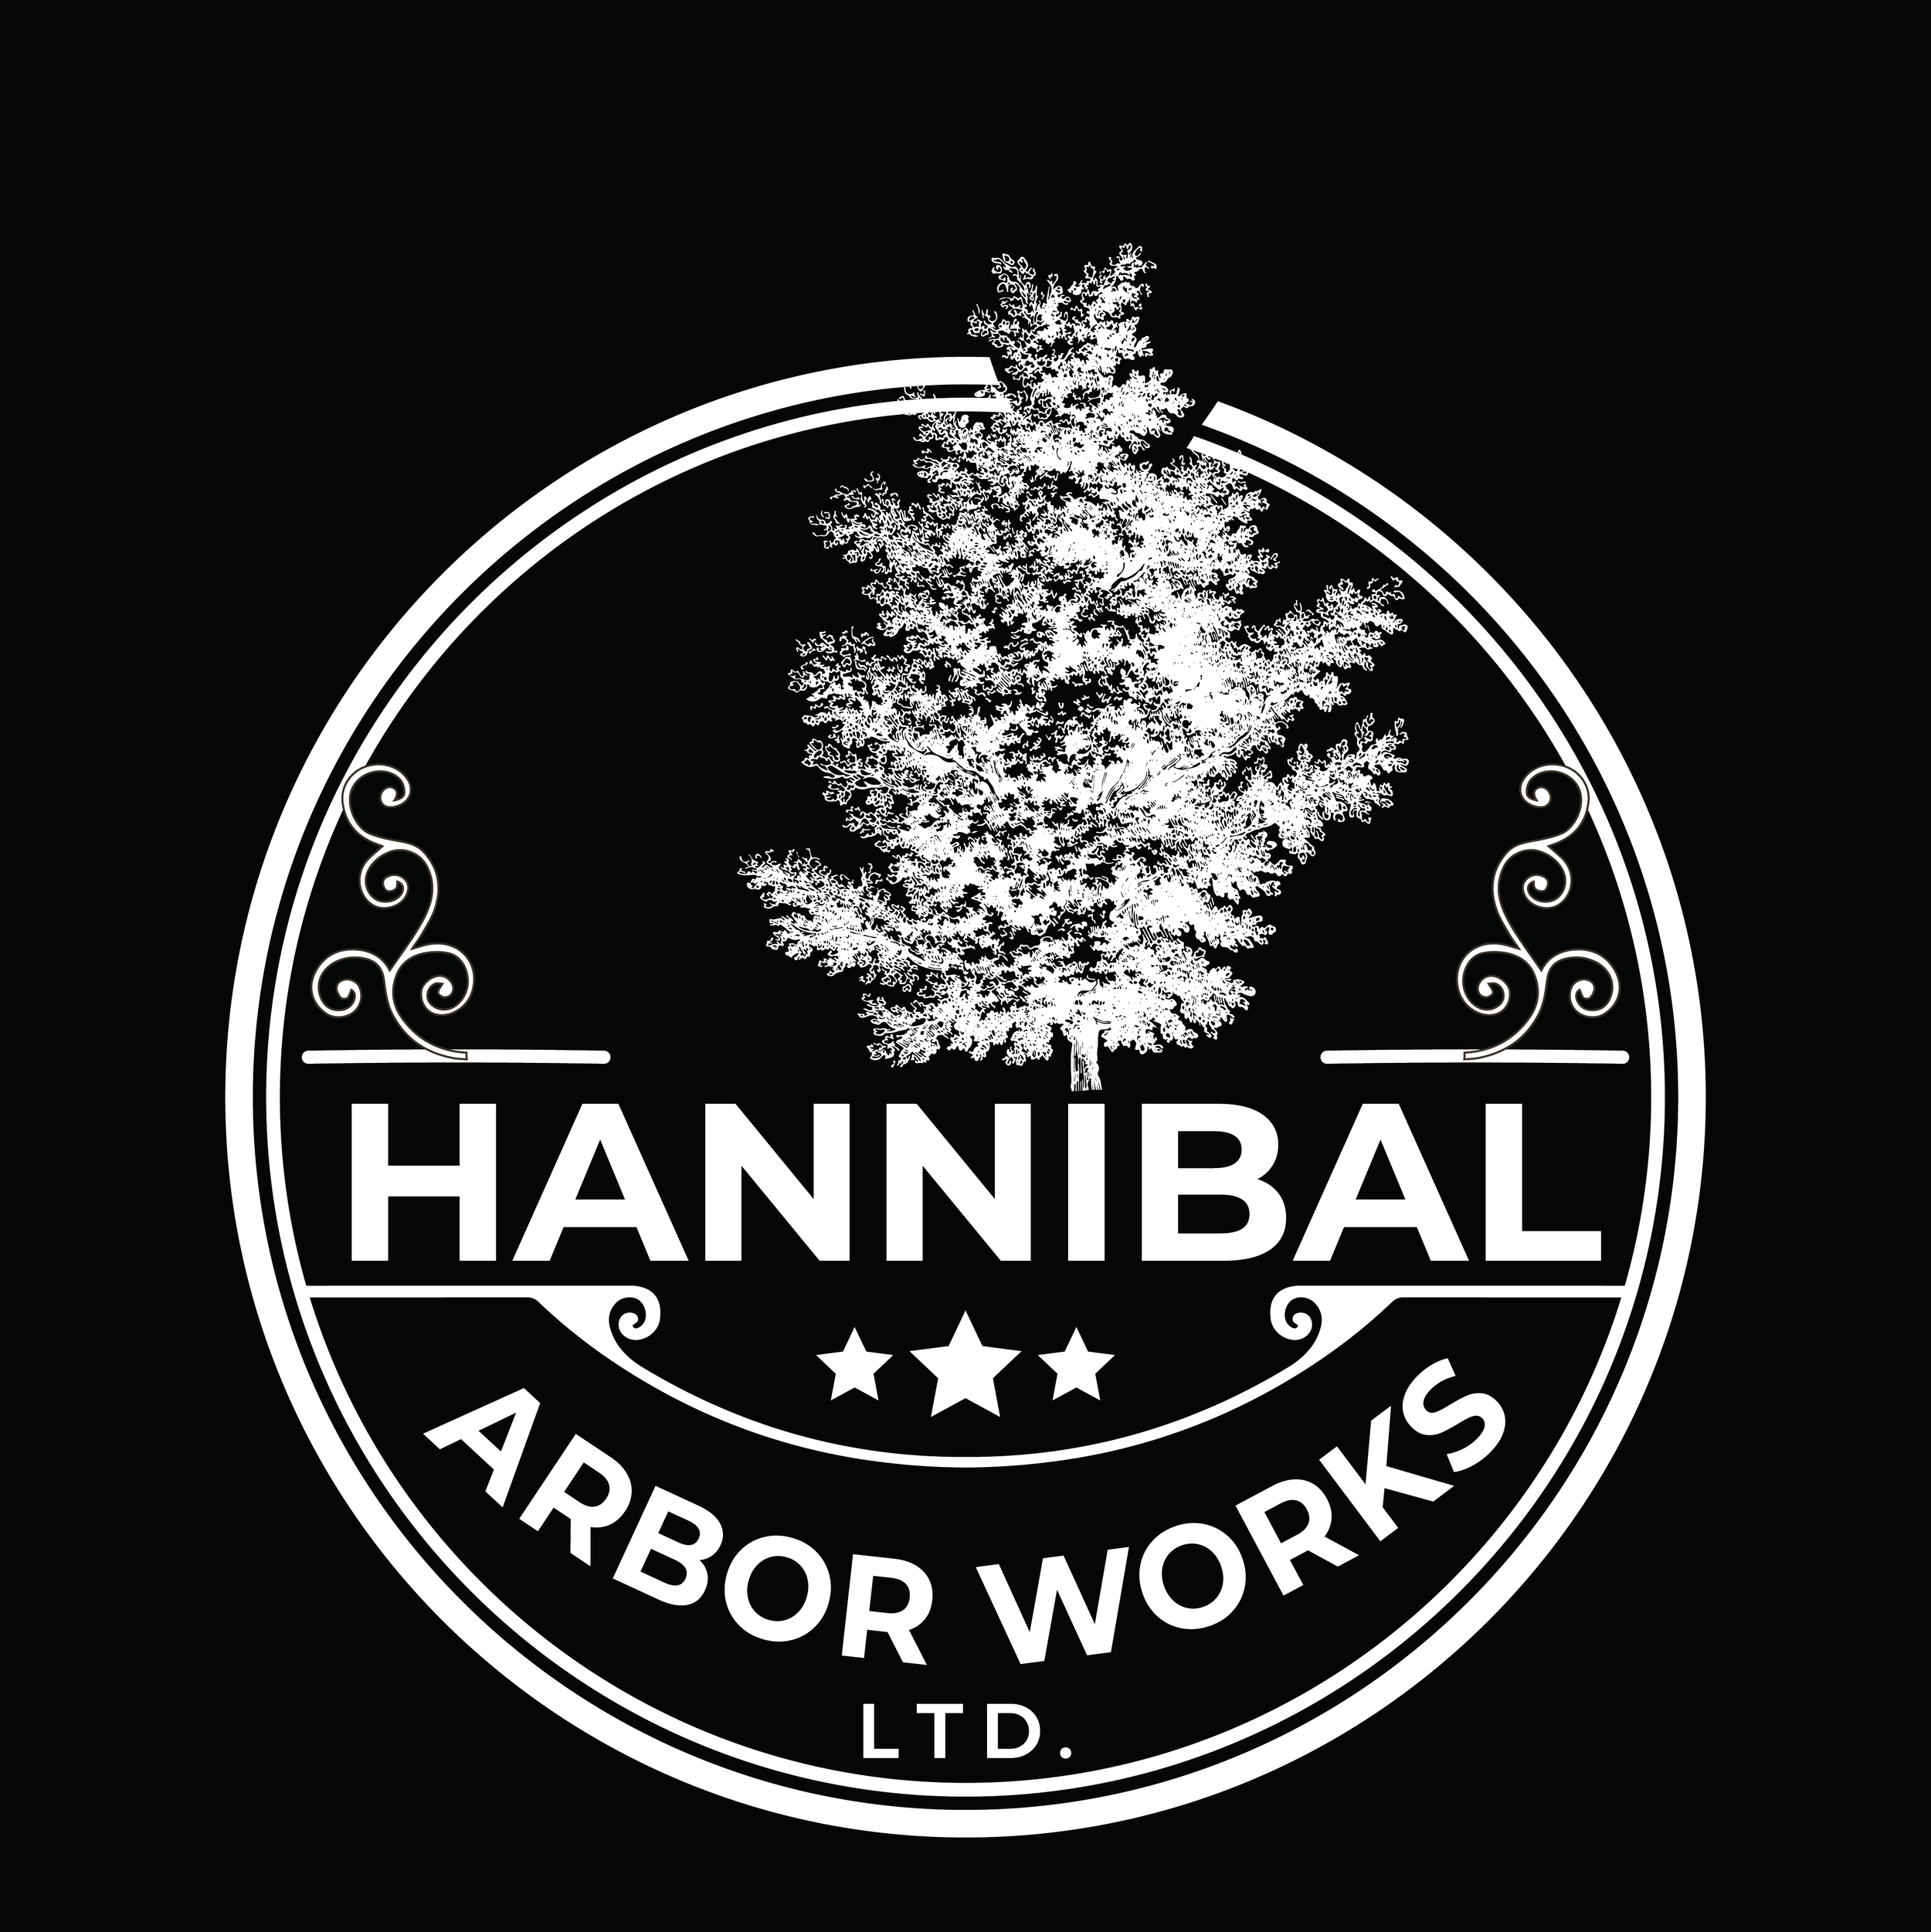 Hannibal Arbor Works Ltd. Logo